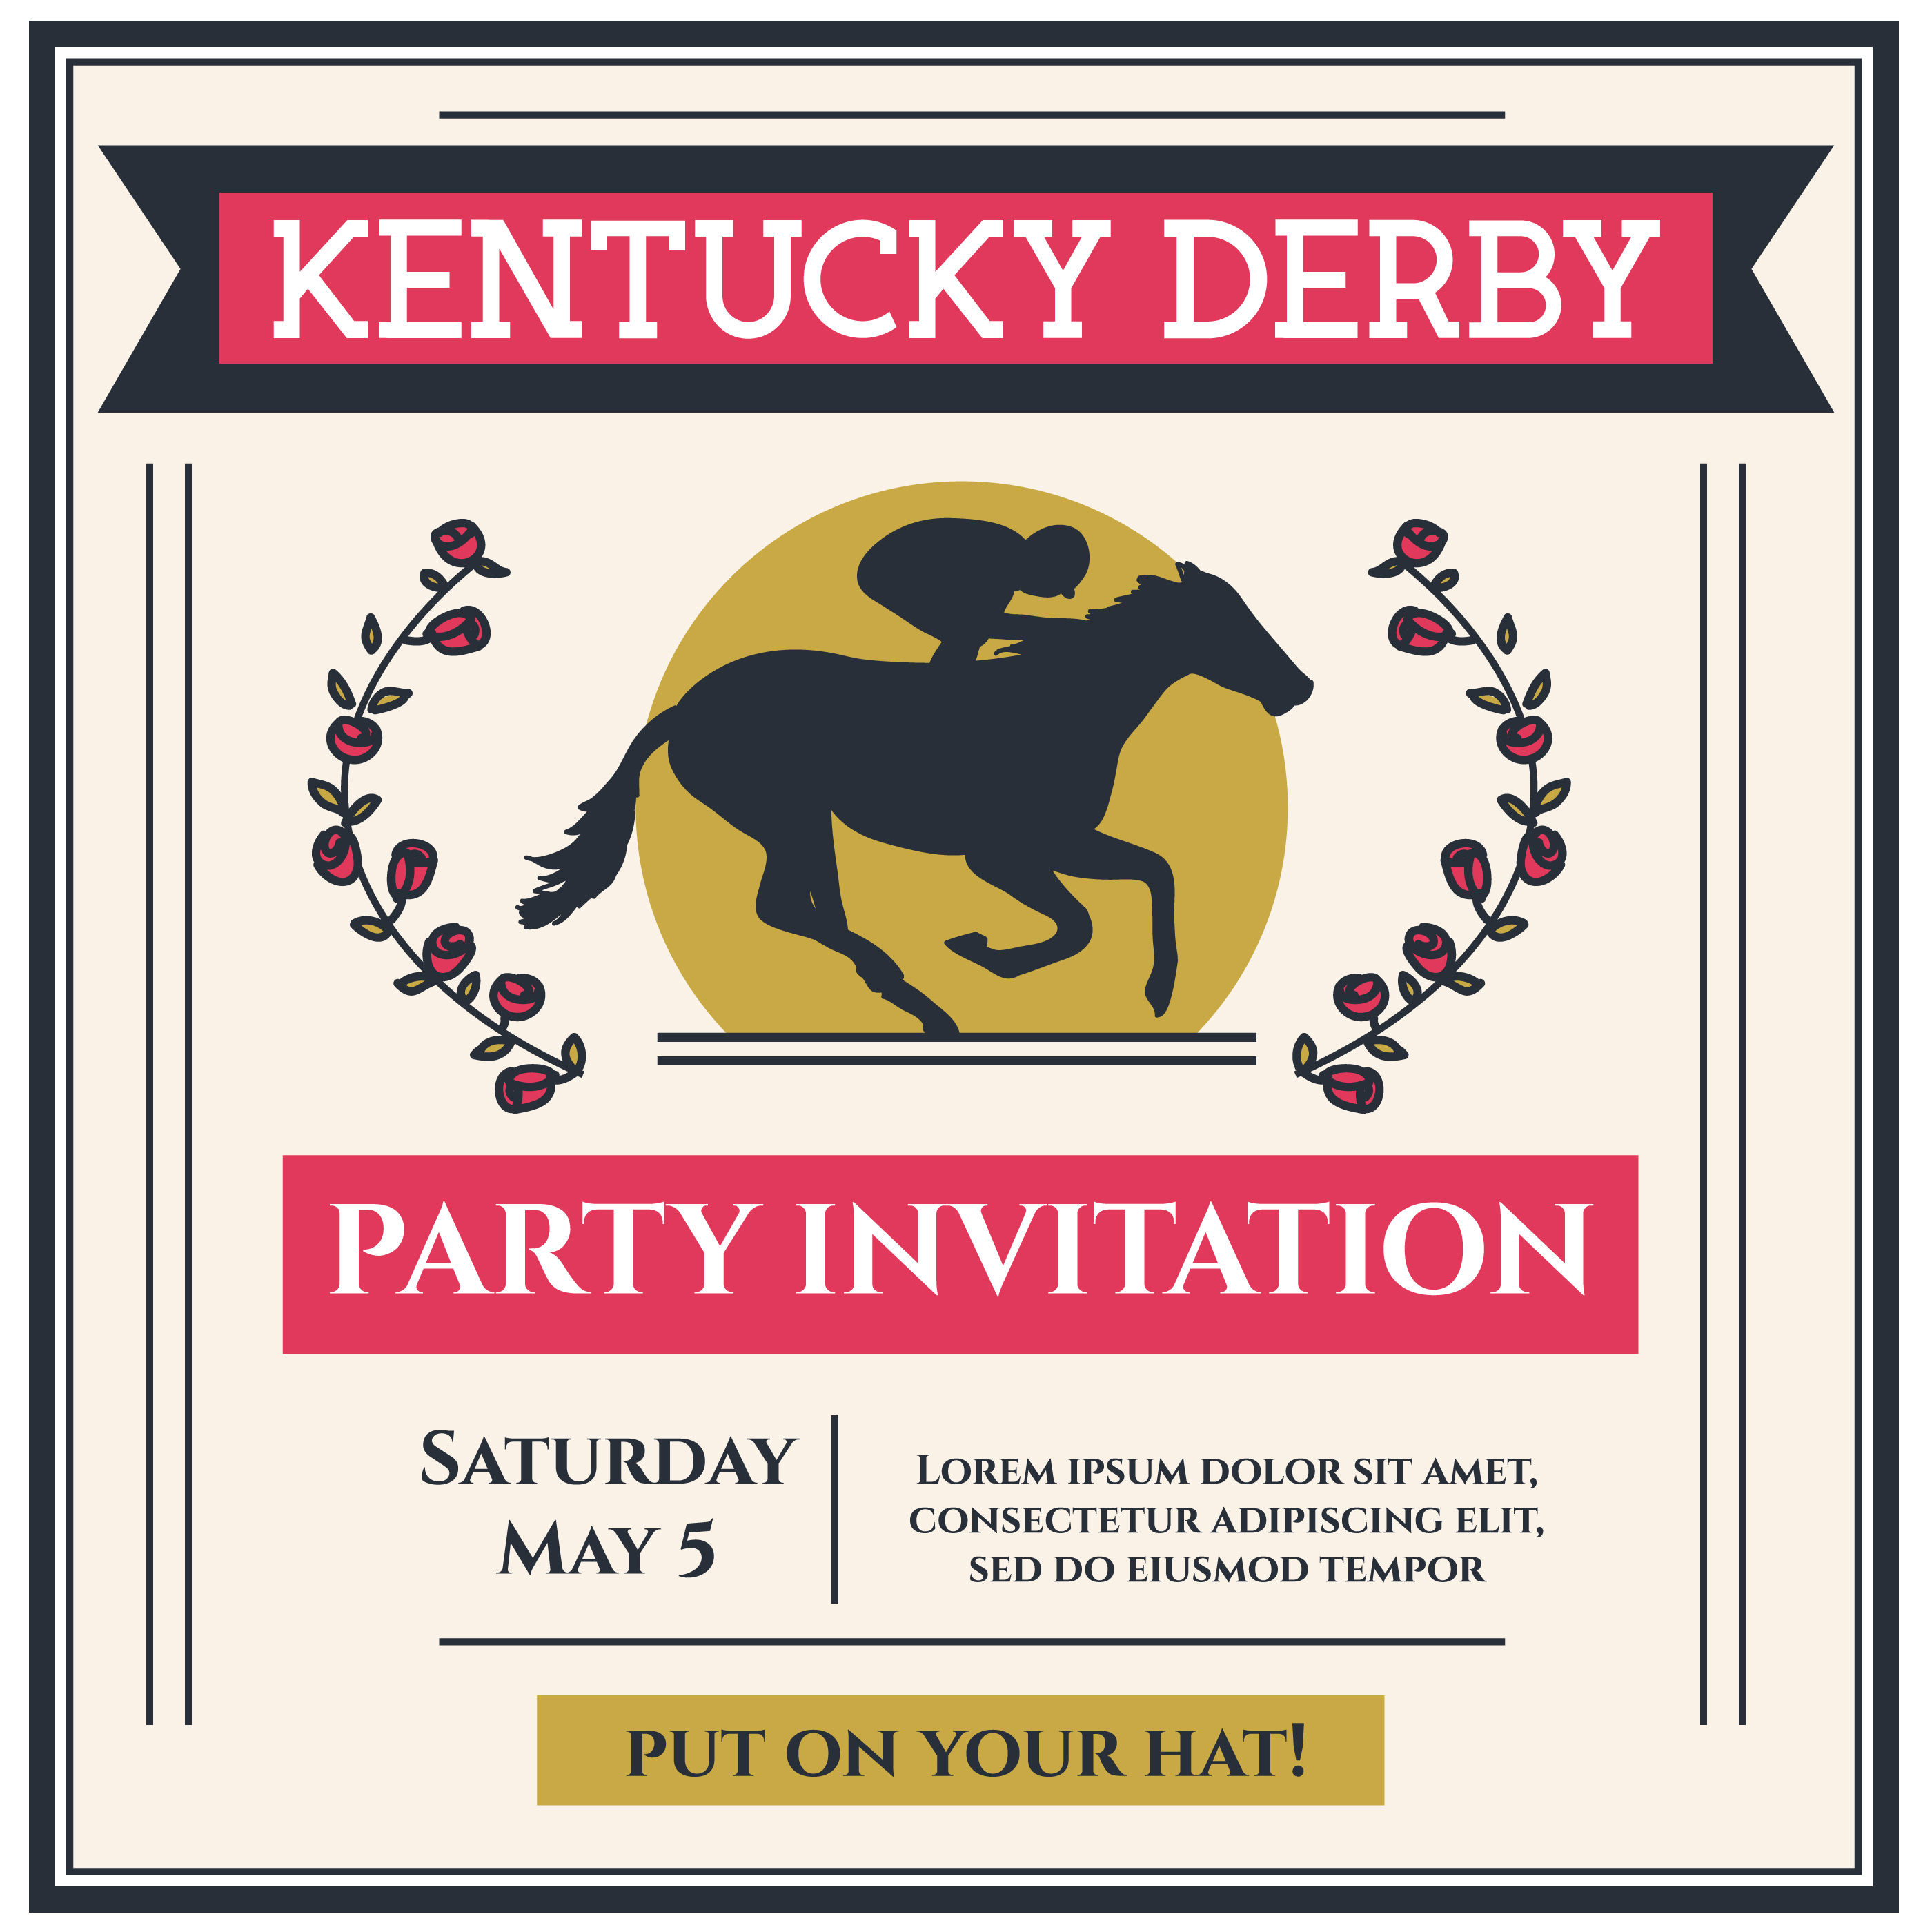 Kentucky Derby Party Invitation Vector 198644 Vector Art at Vecteezy